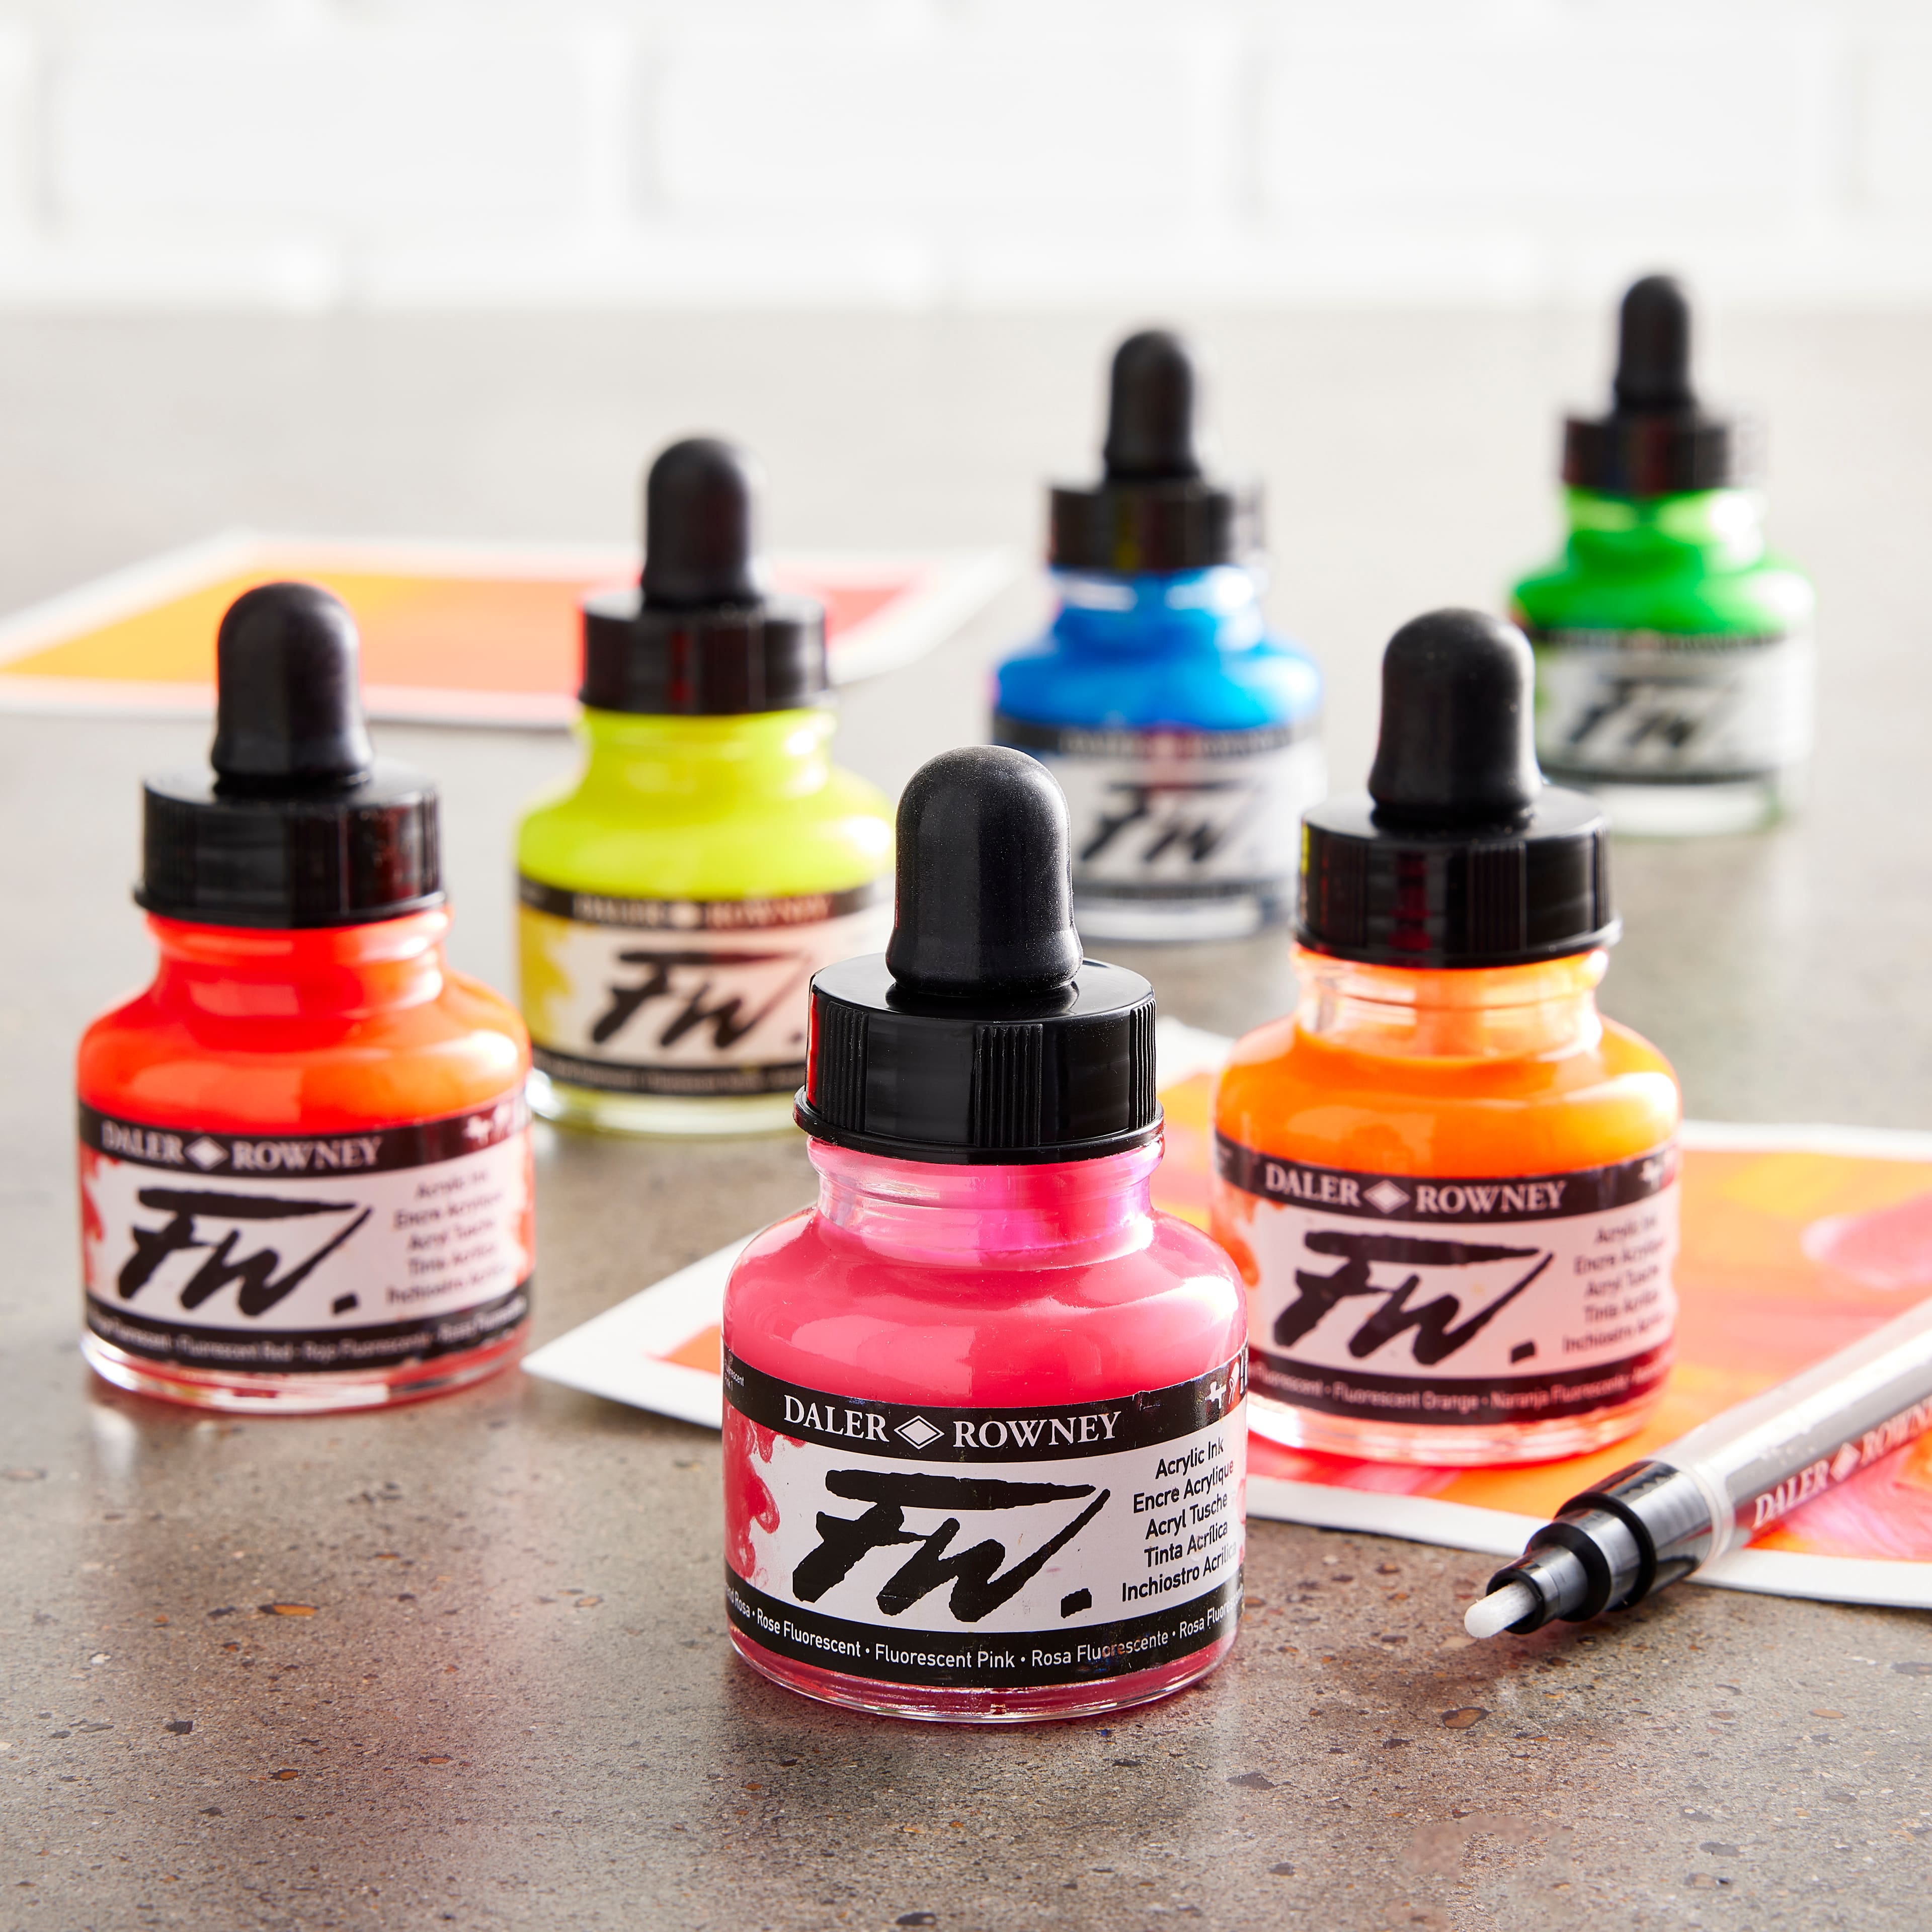 Daler-Rowney&#xAE; FW Neon Acrylic Ink Set